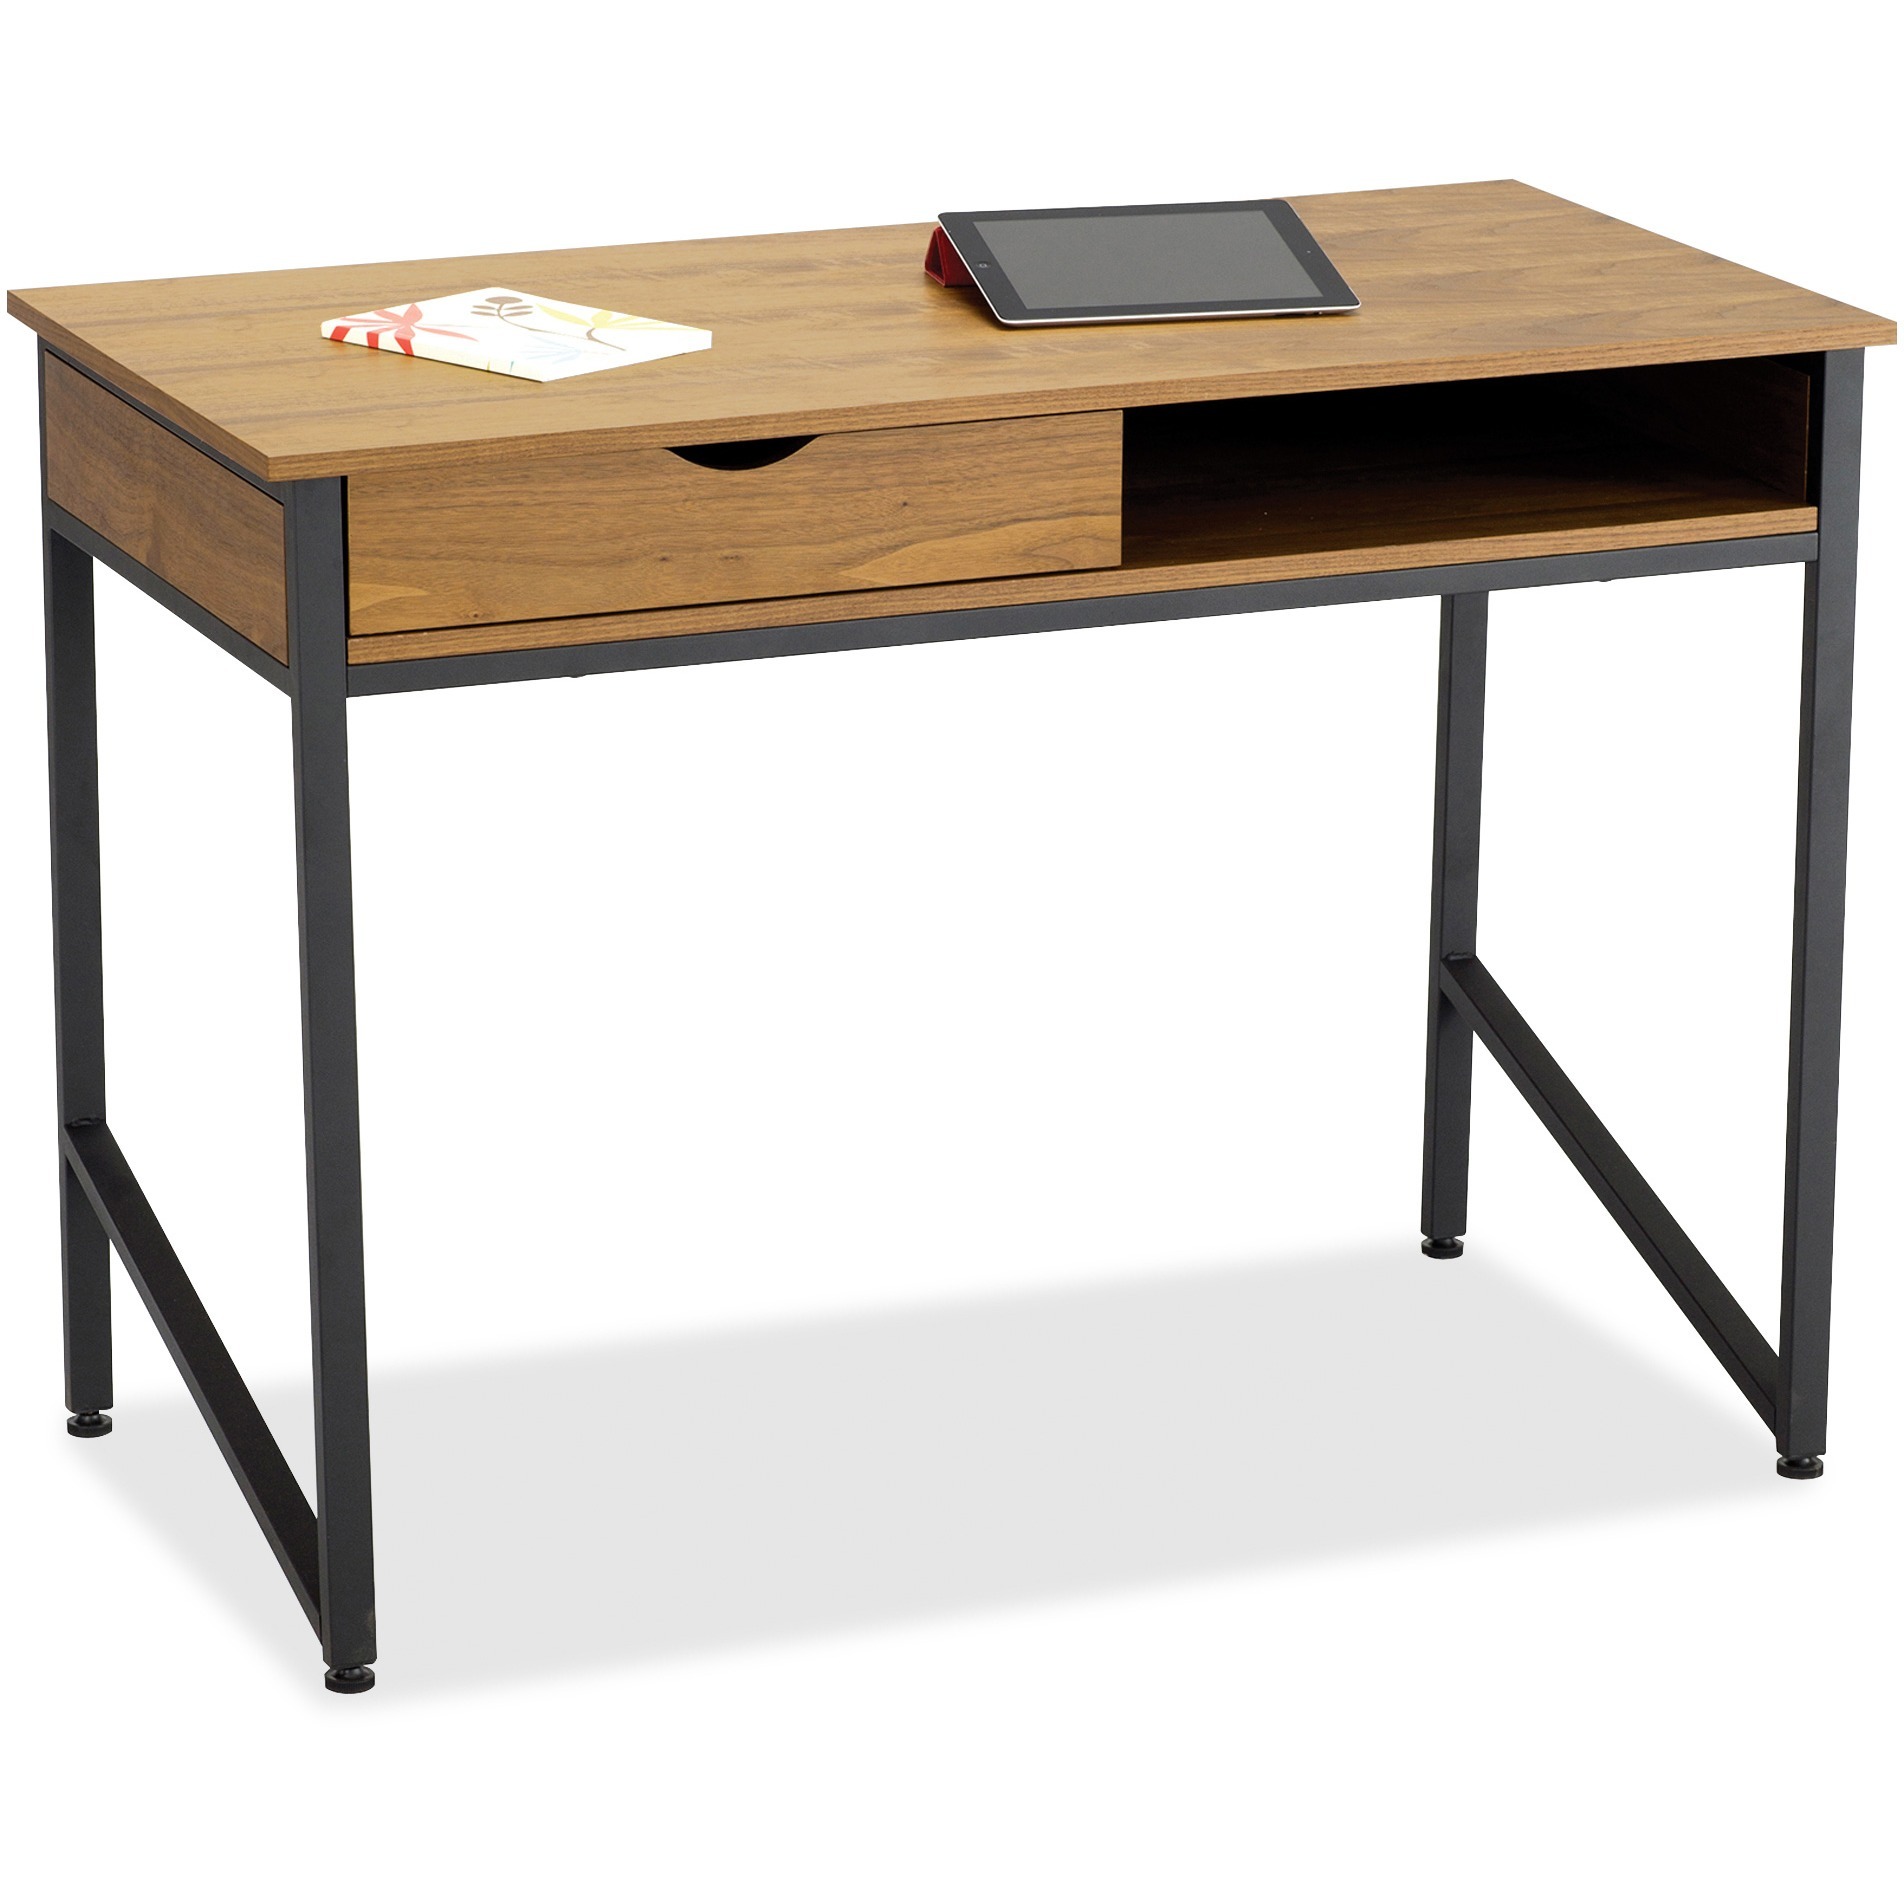 Single Drawer Office Desk, 43 1/4 x 21 5/8 x 30 3/4, Natural/Black